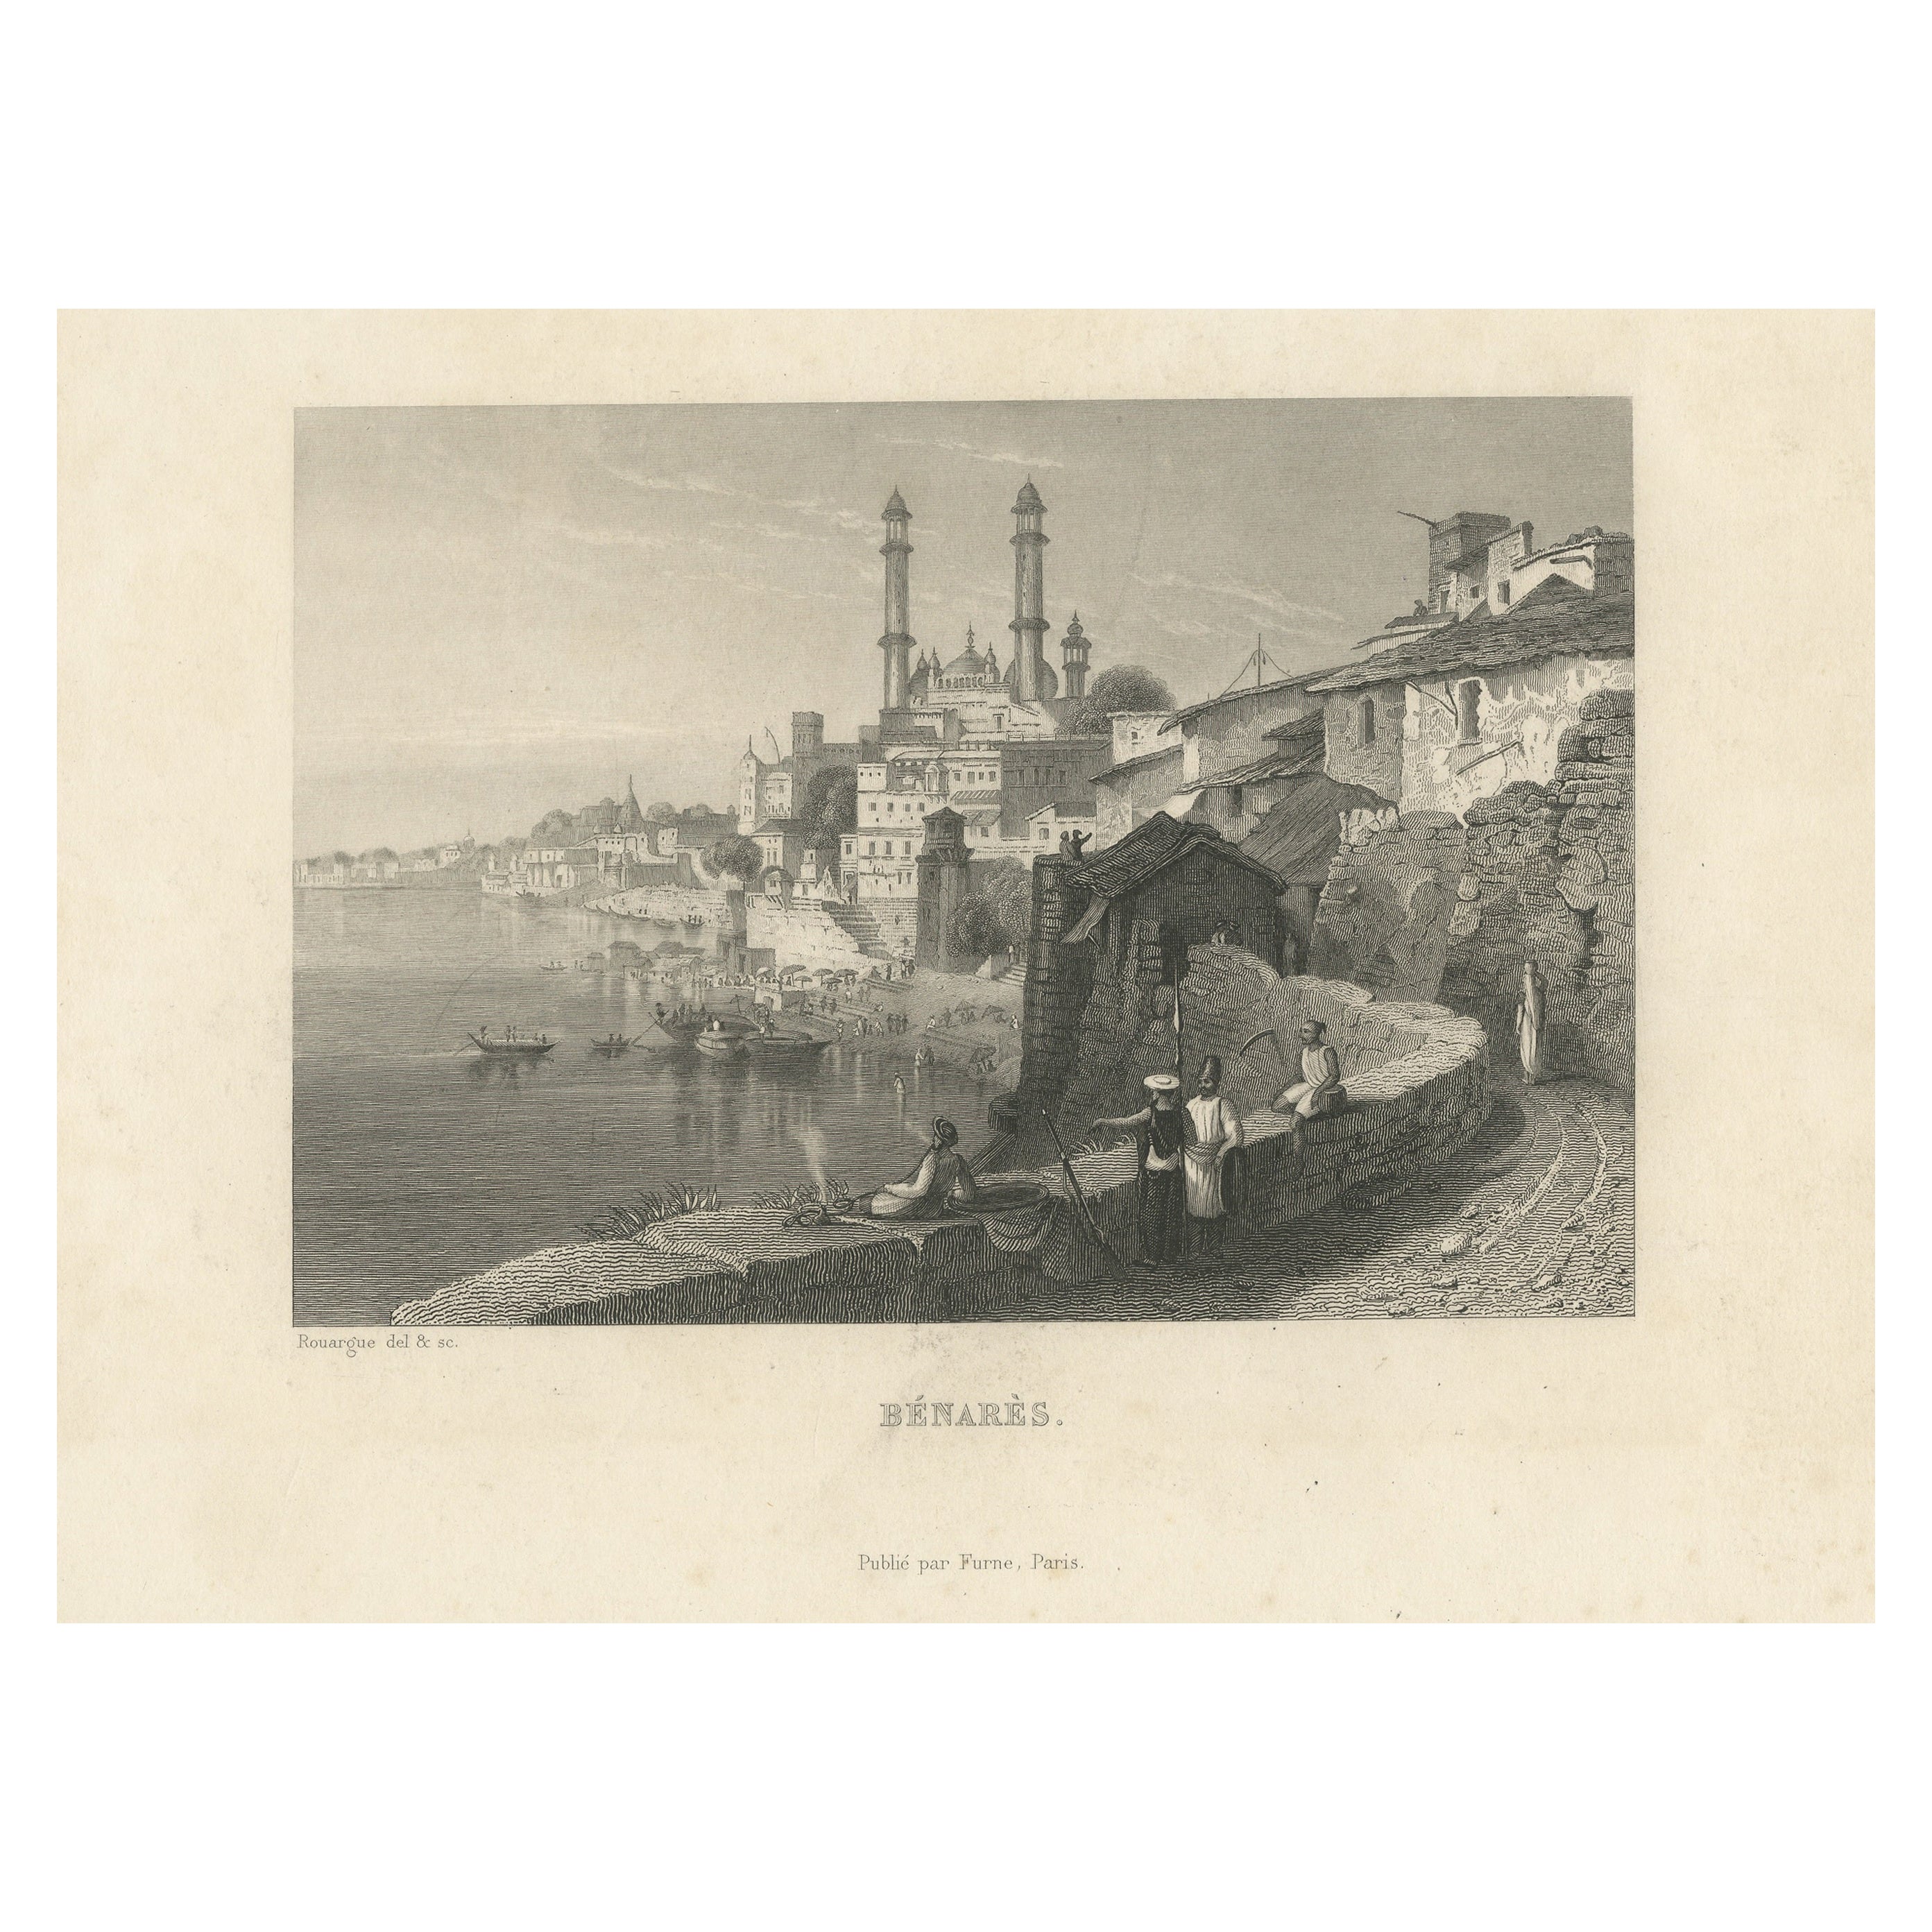 Antique Print of the City of Varanasi or Benares, India